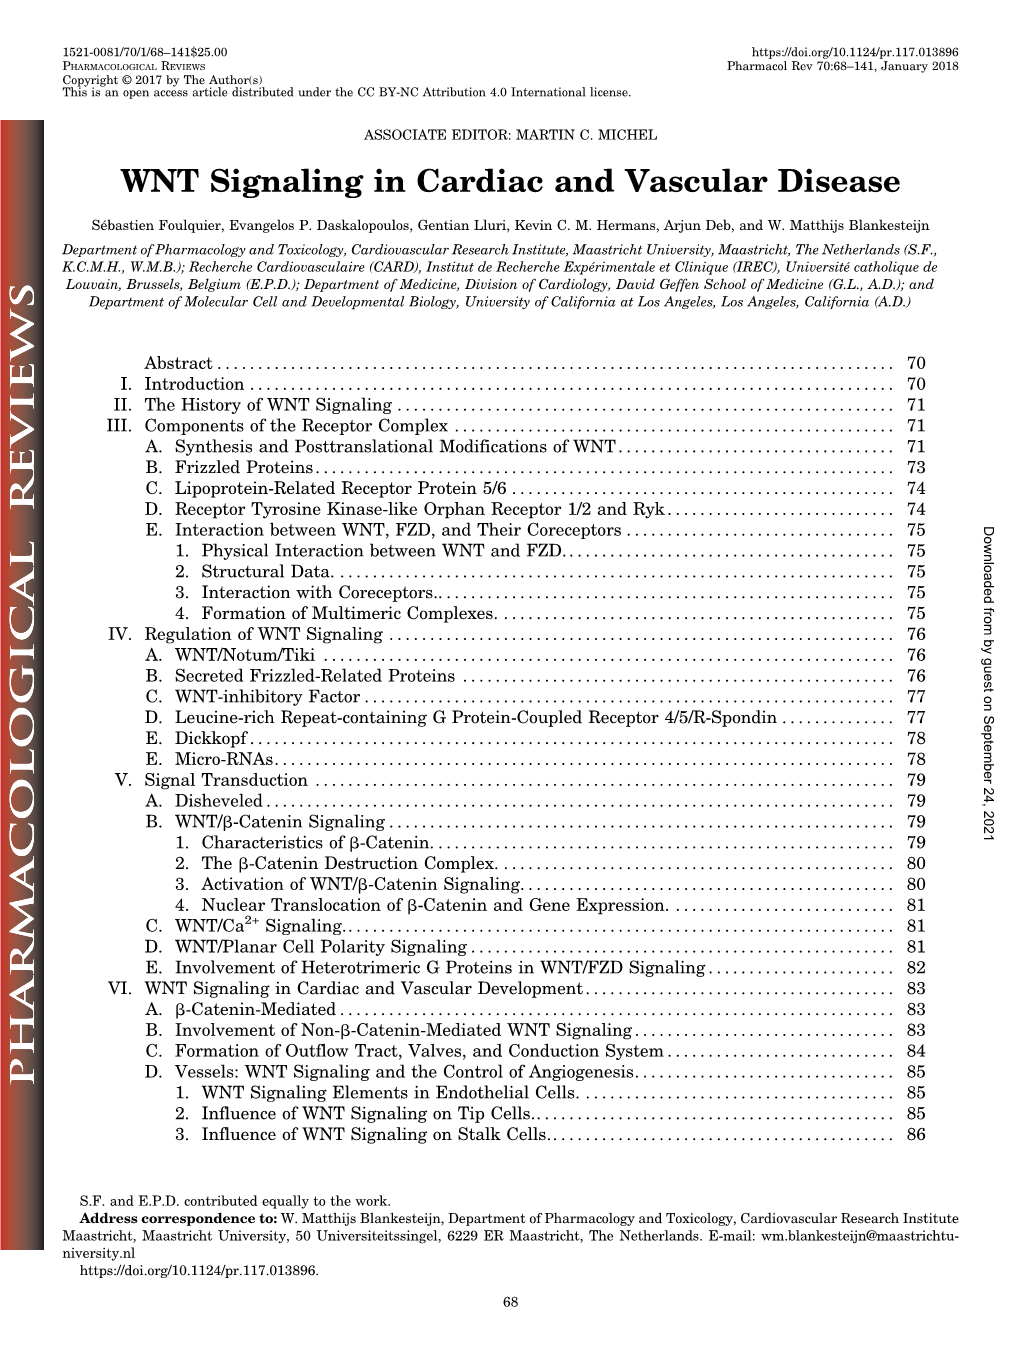 WNT Signaling in Cardiac and Vascular Disease